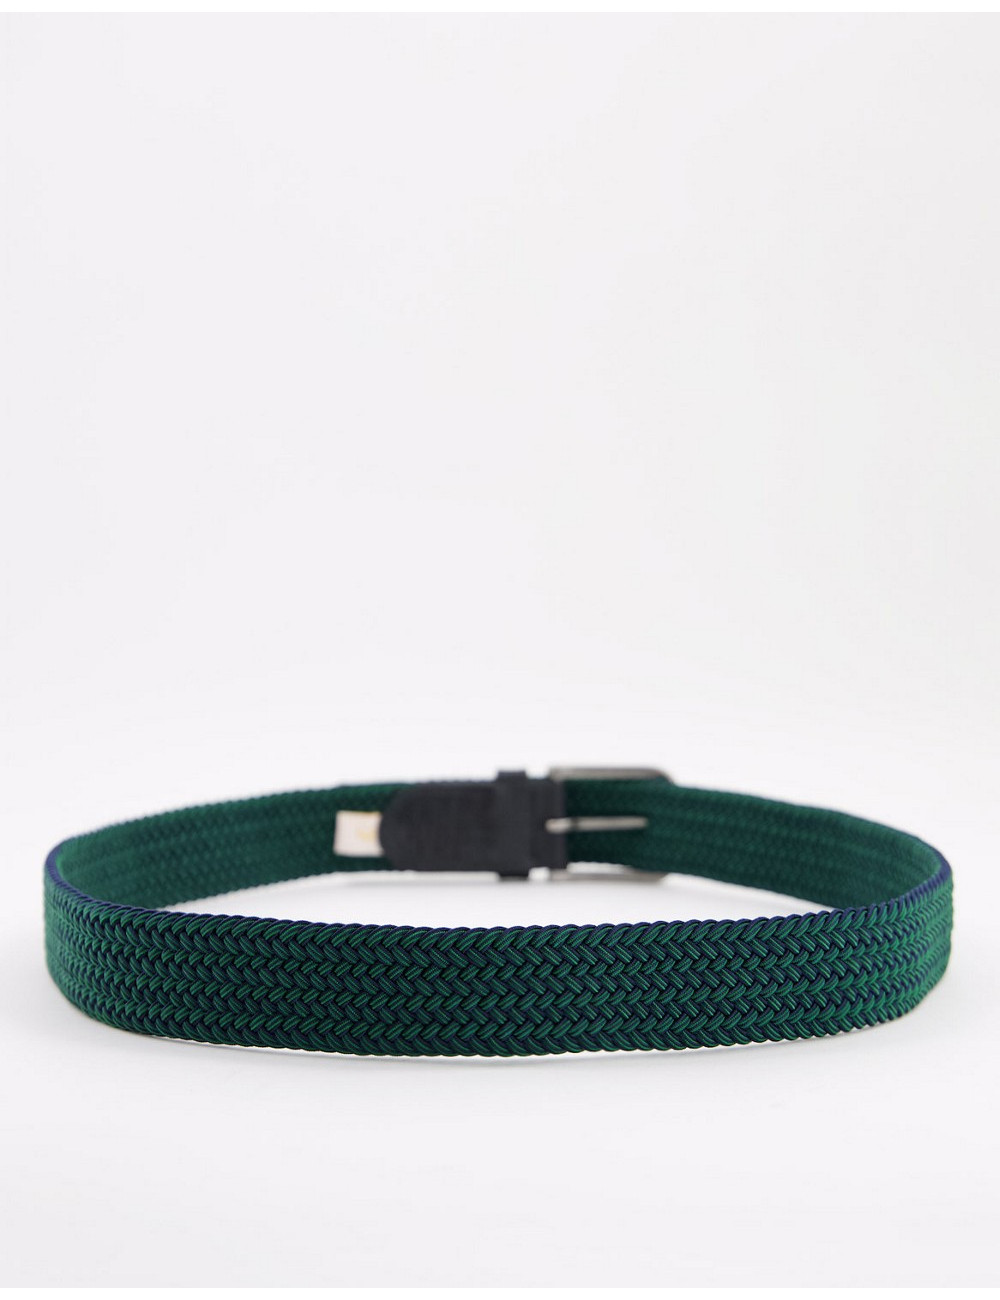 Farah woven belt in dark green